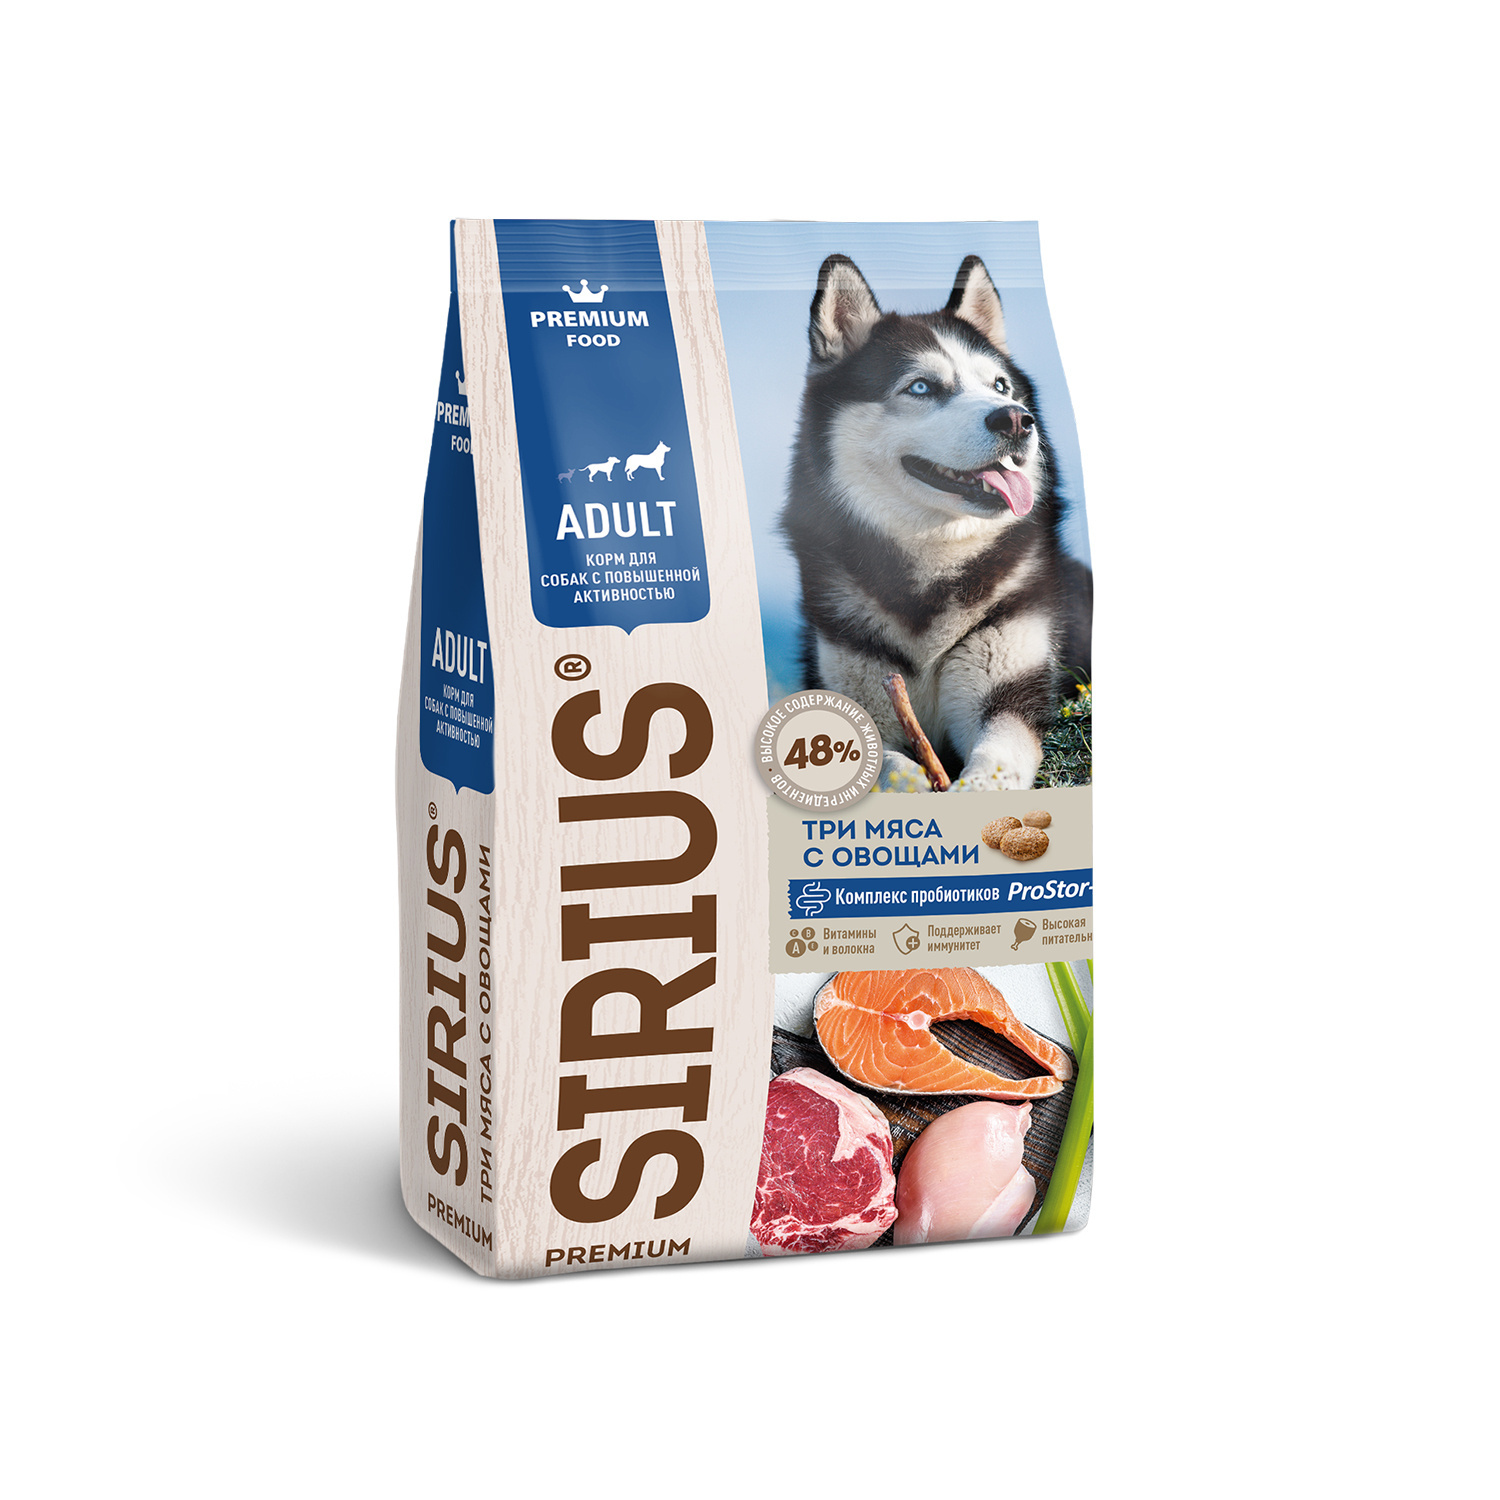 Sirius Sirius сухой корм для собак с повышенной активностью, три мяса с овощами (2 кг) sirius сухой корм для взрослых собак с повышенной активностью 3 мяса с овощами 2кг